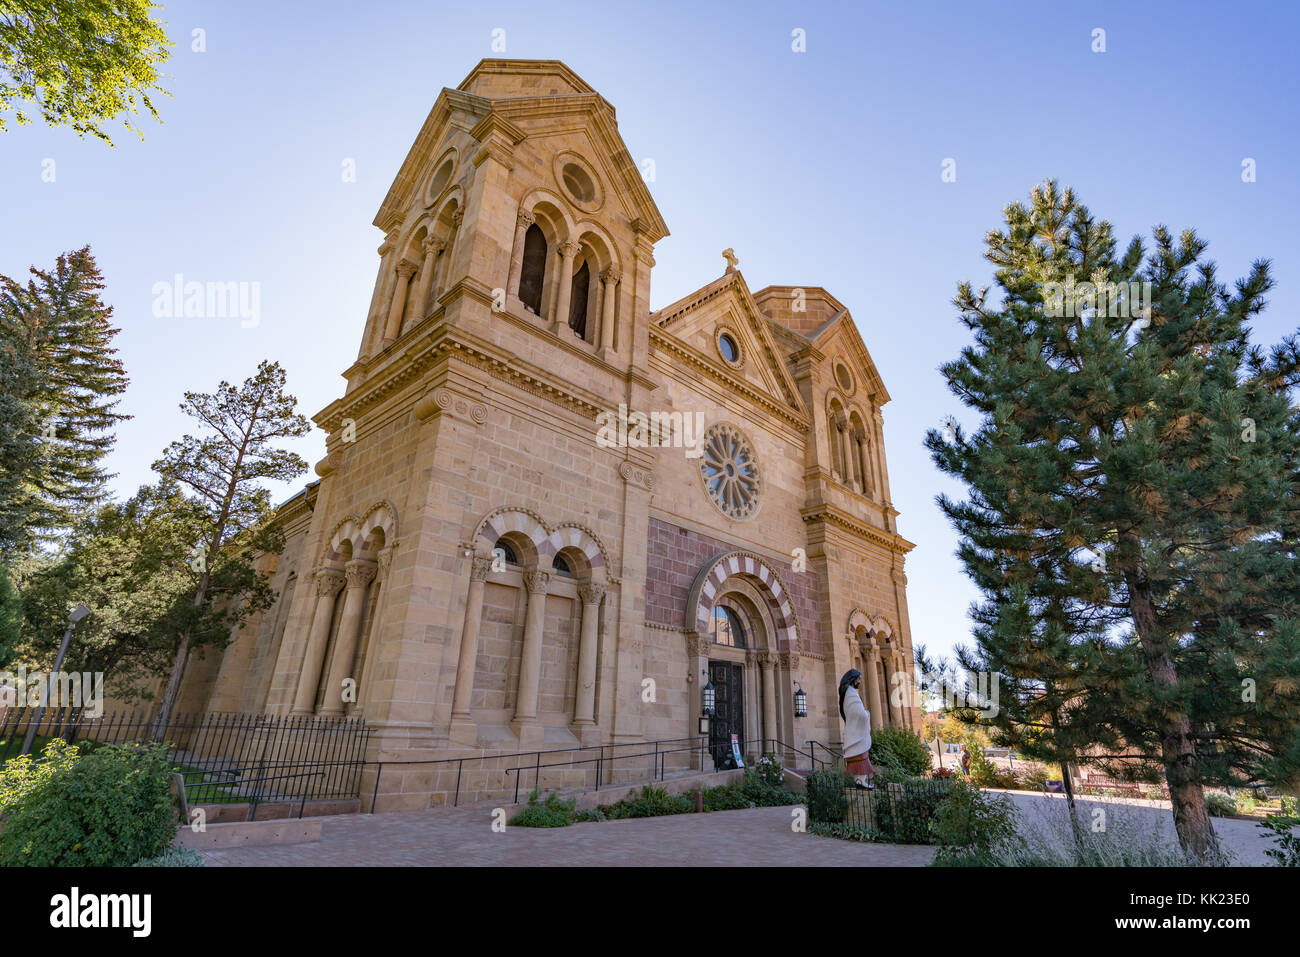 SANTA FE, NM - OCTOBER 13: Historic Cathedral Basilica of St Francis Assisi in Santa Fe, New Mexico on October 13, 2017 Stock Photo